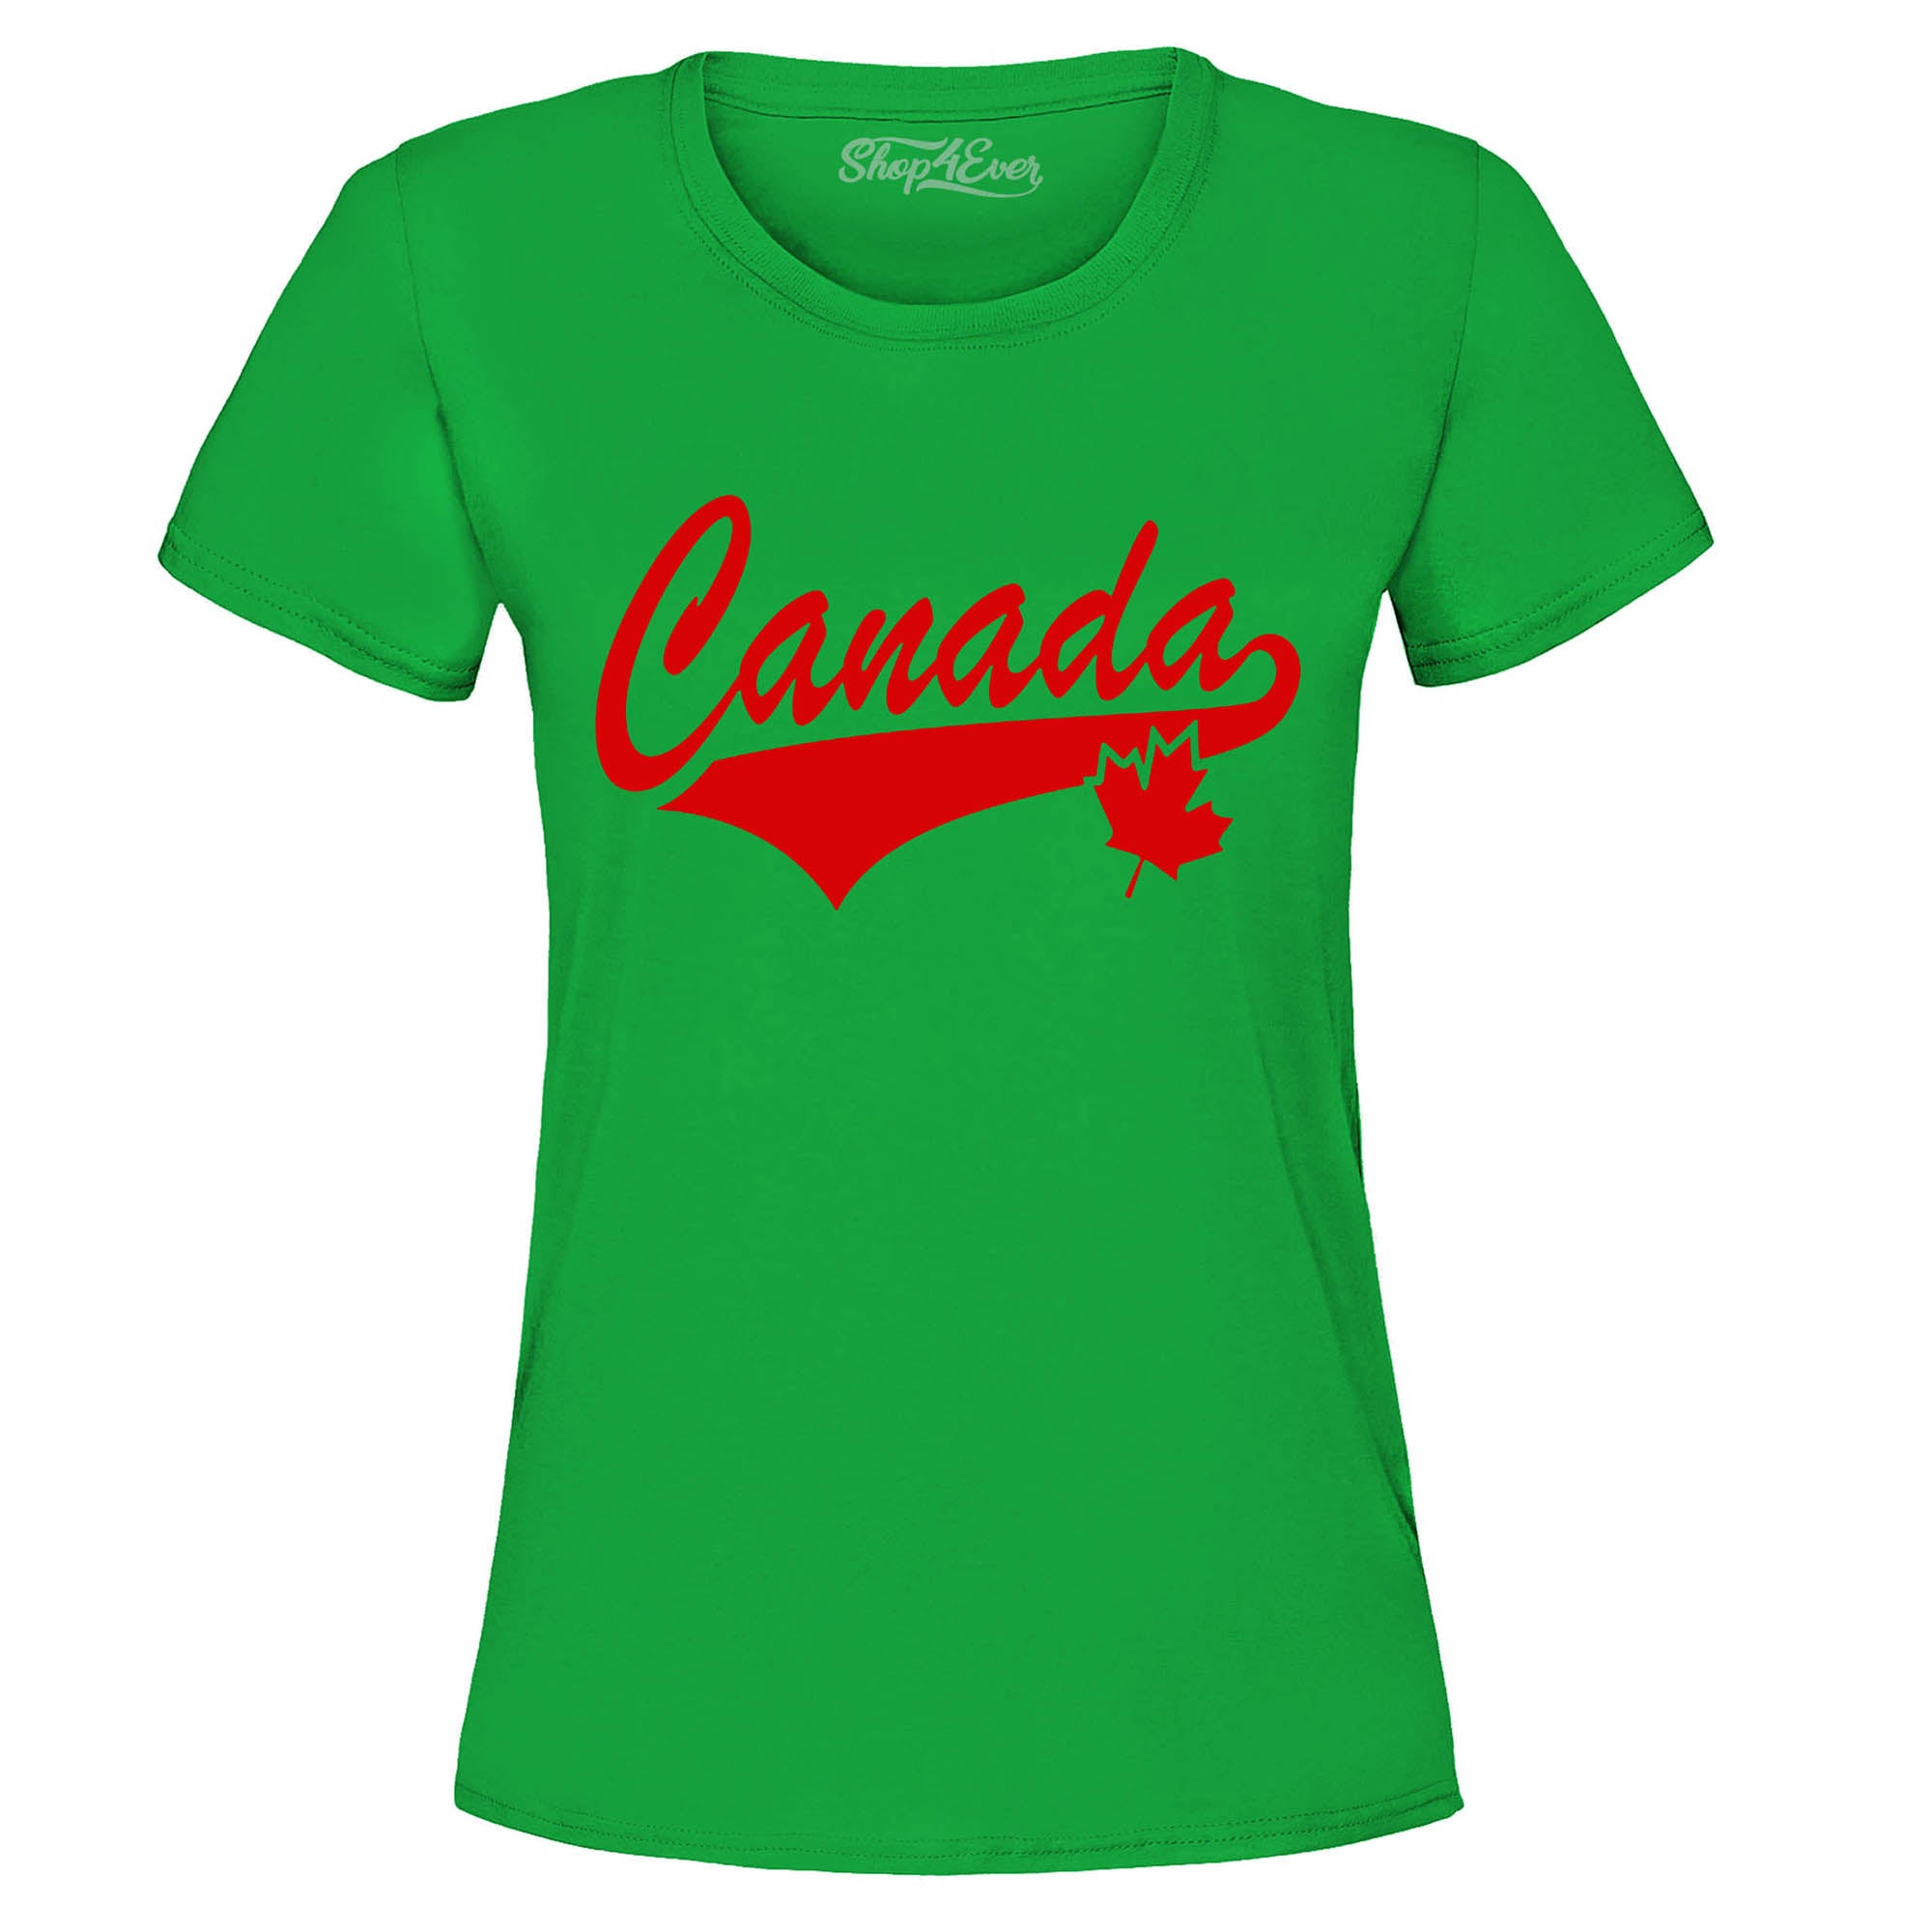 Canada Red Women's T-Shirt